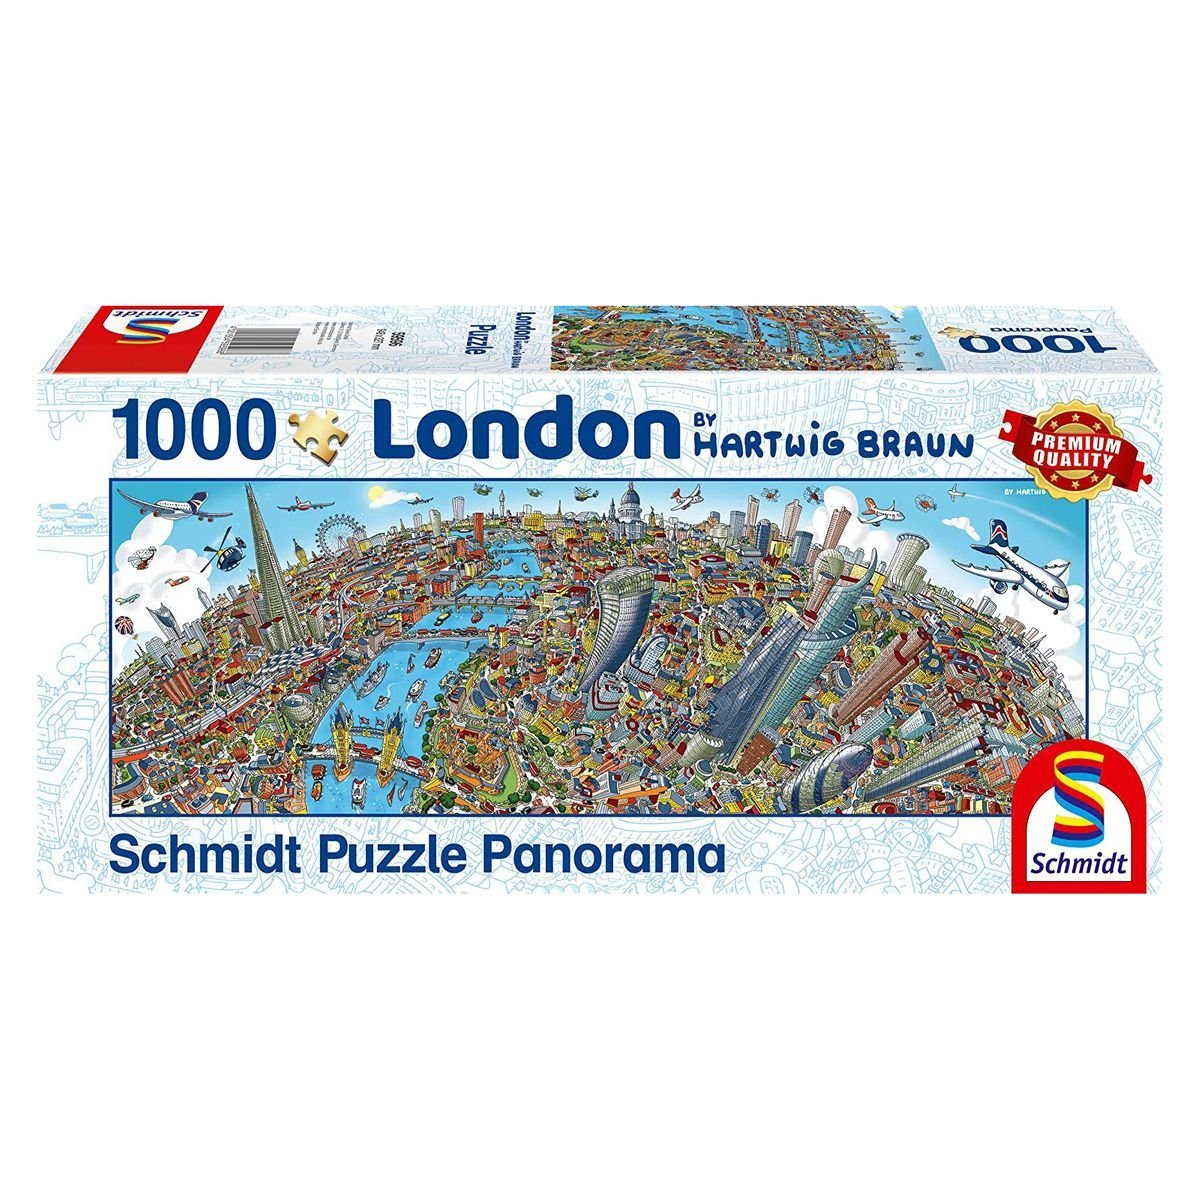 Schmidt Spiele Puzzle »Schmidt 59596 - Premium Quality - Hartwig Braun -  Stadtbild London - Panorama Puzzle 1000 Teile«, 1000 Puzzleteile online  kaufen | OTTO